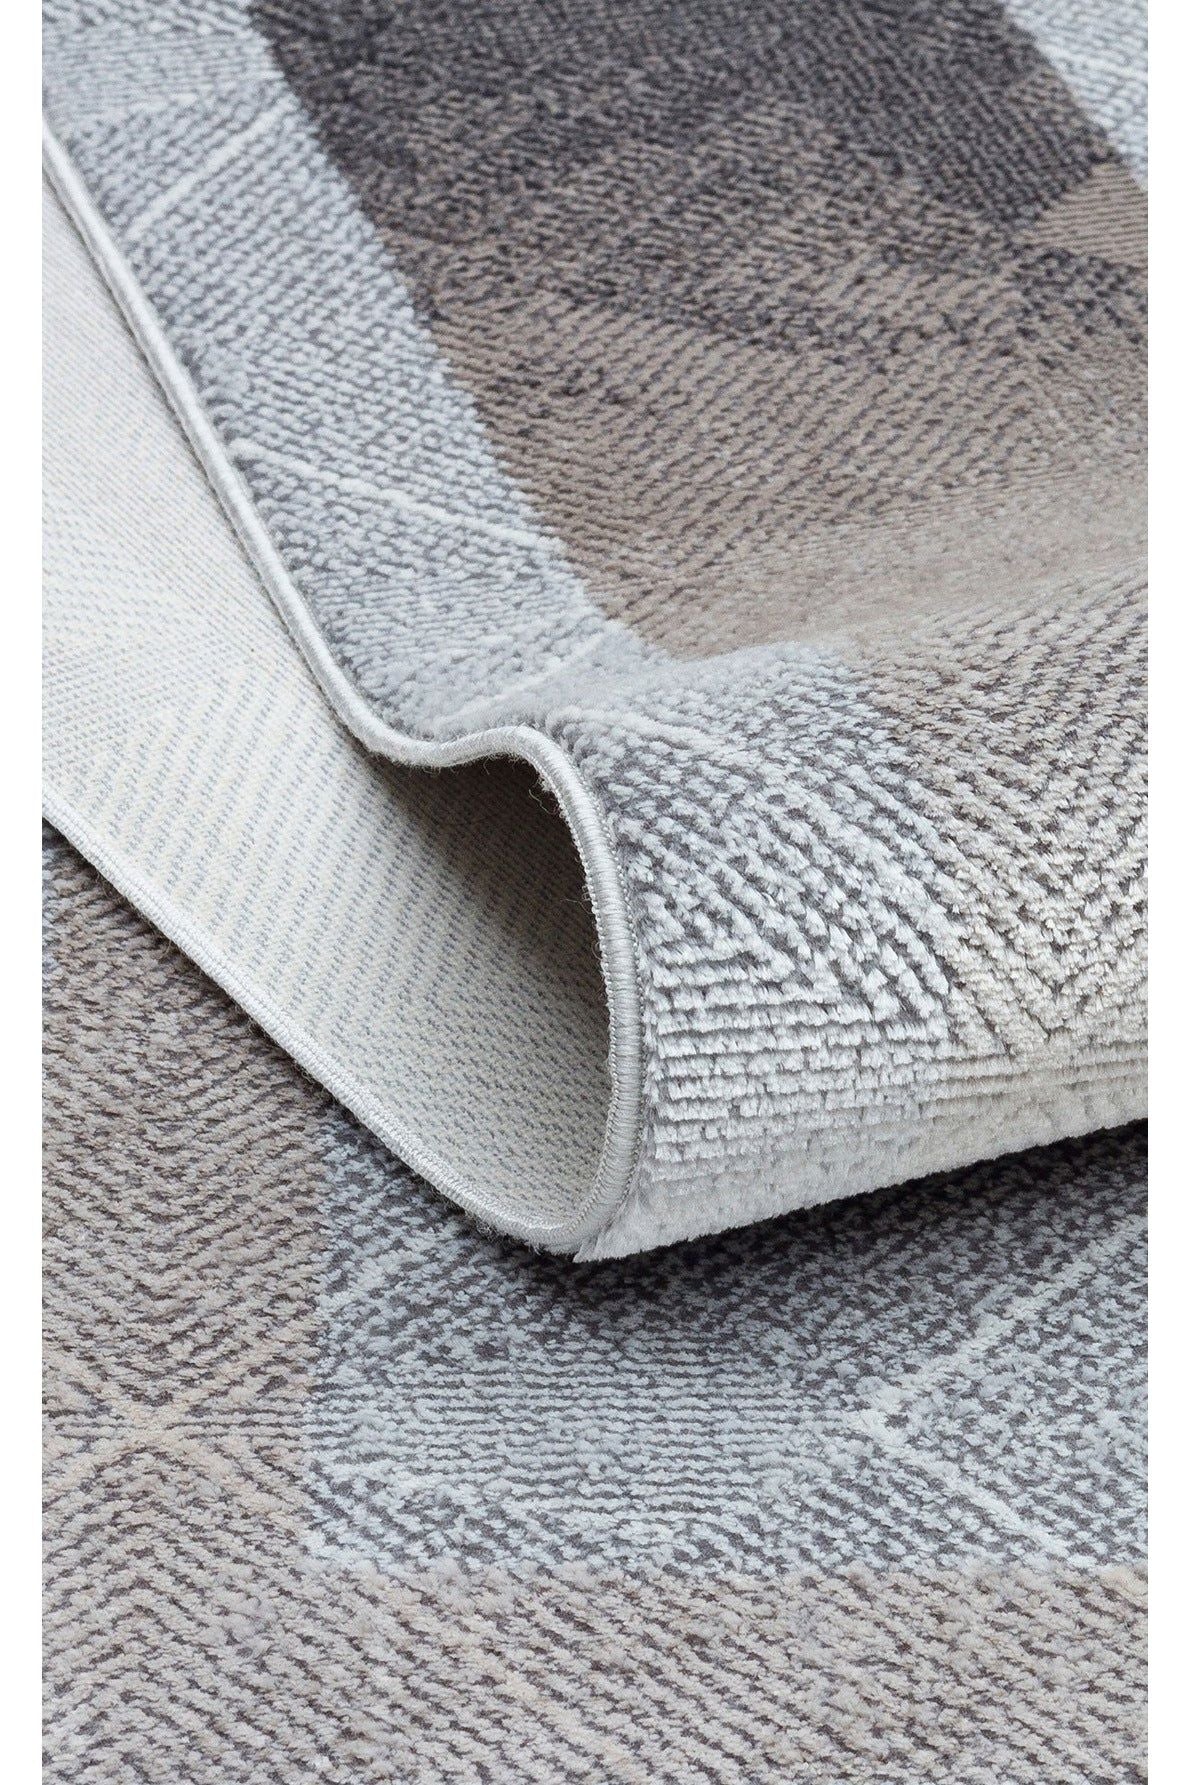 #Turkish_Carpets_Rugs# #Modern_Carpets# #Abrash_Carpets#Blv 01 Grey Blue